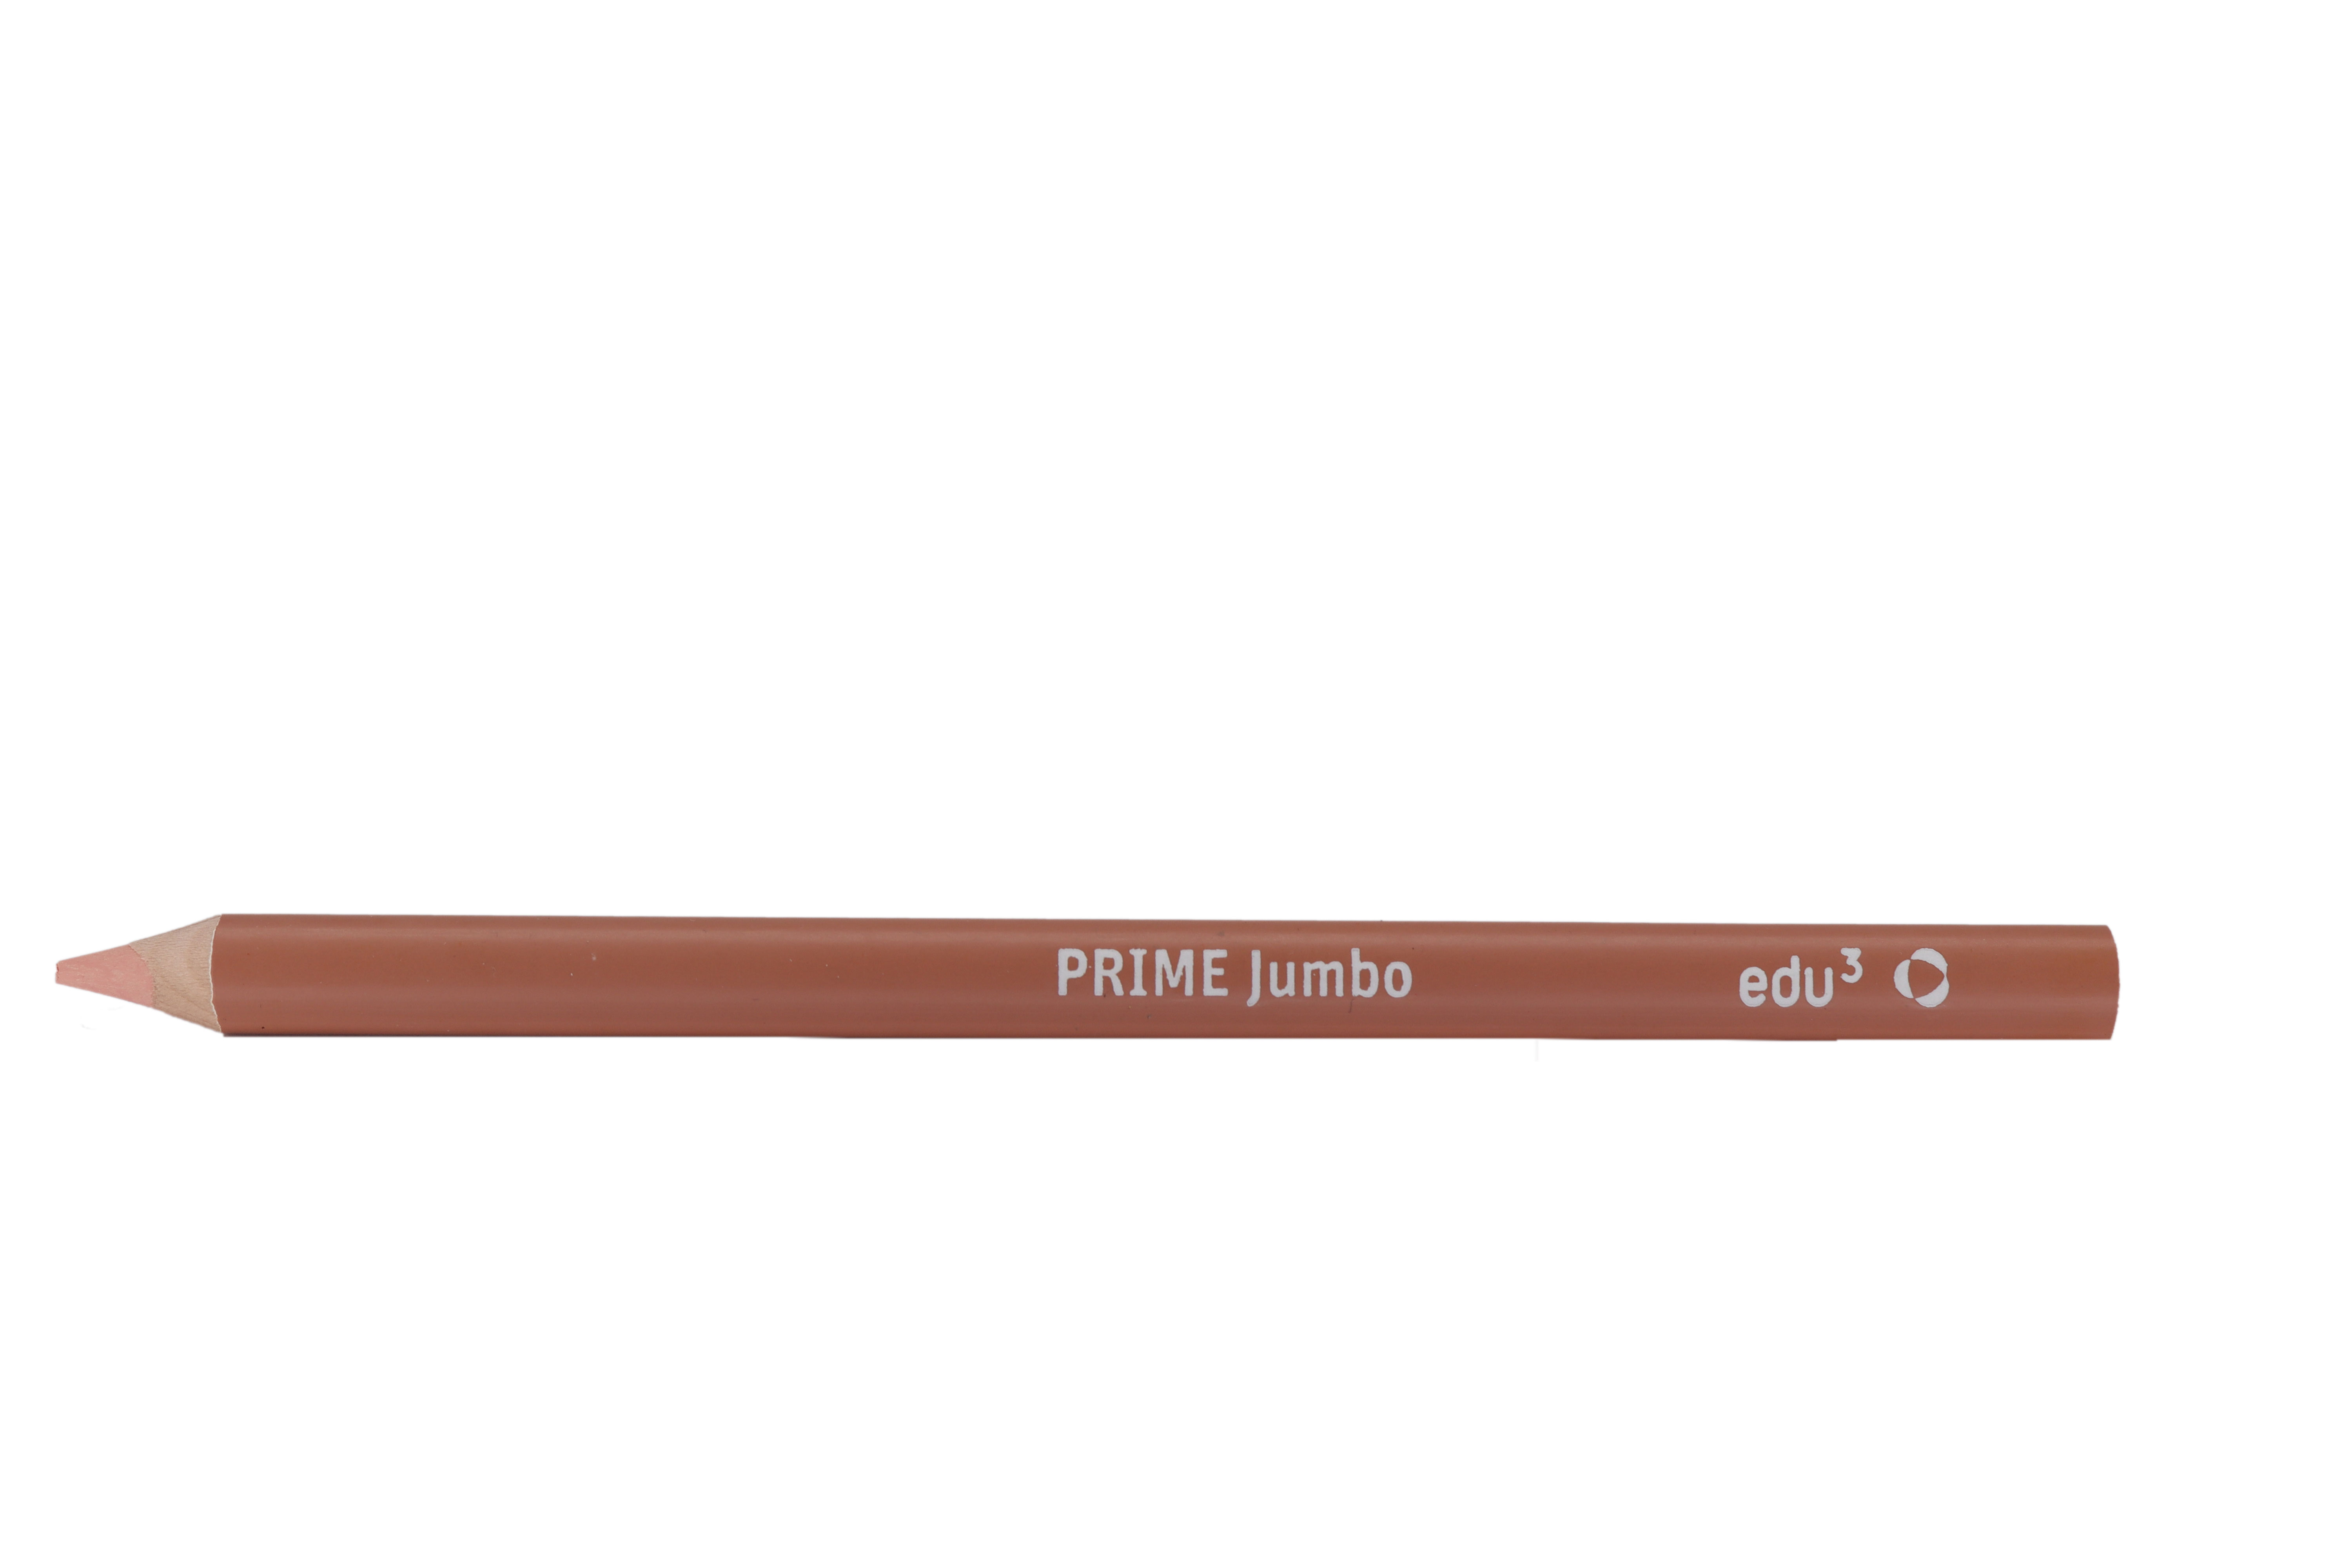 edu³ PRIME Jumbo Buntstifte dreikant fleischfarben